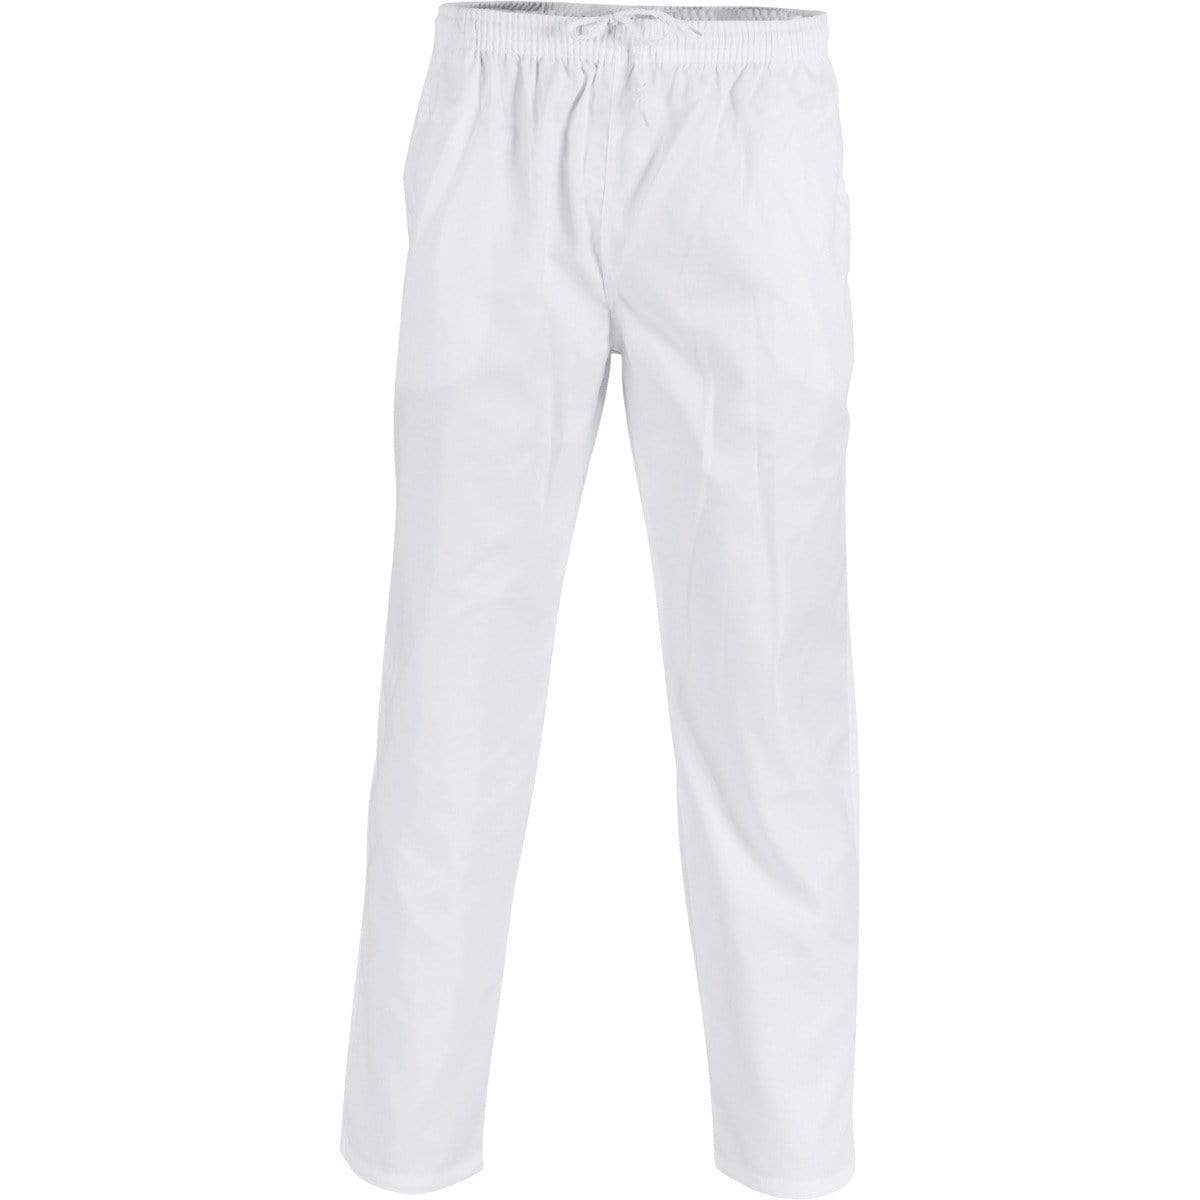 Dnc Workwear Polyester Cotton Drawstring Chef Pants - 1501 Work Wear DNC Workwear White XS 